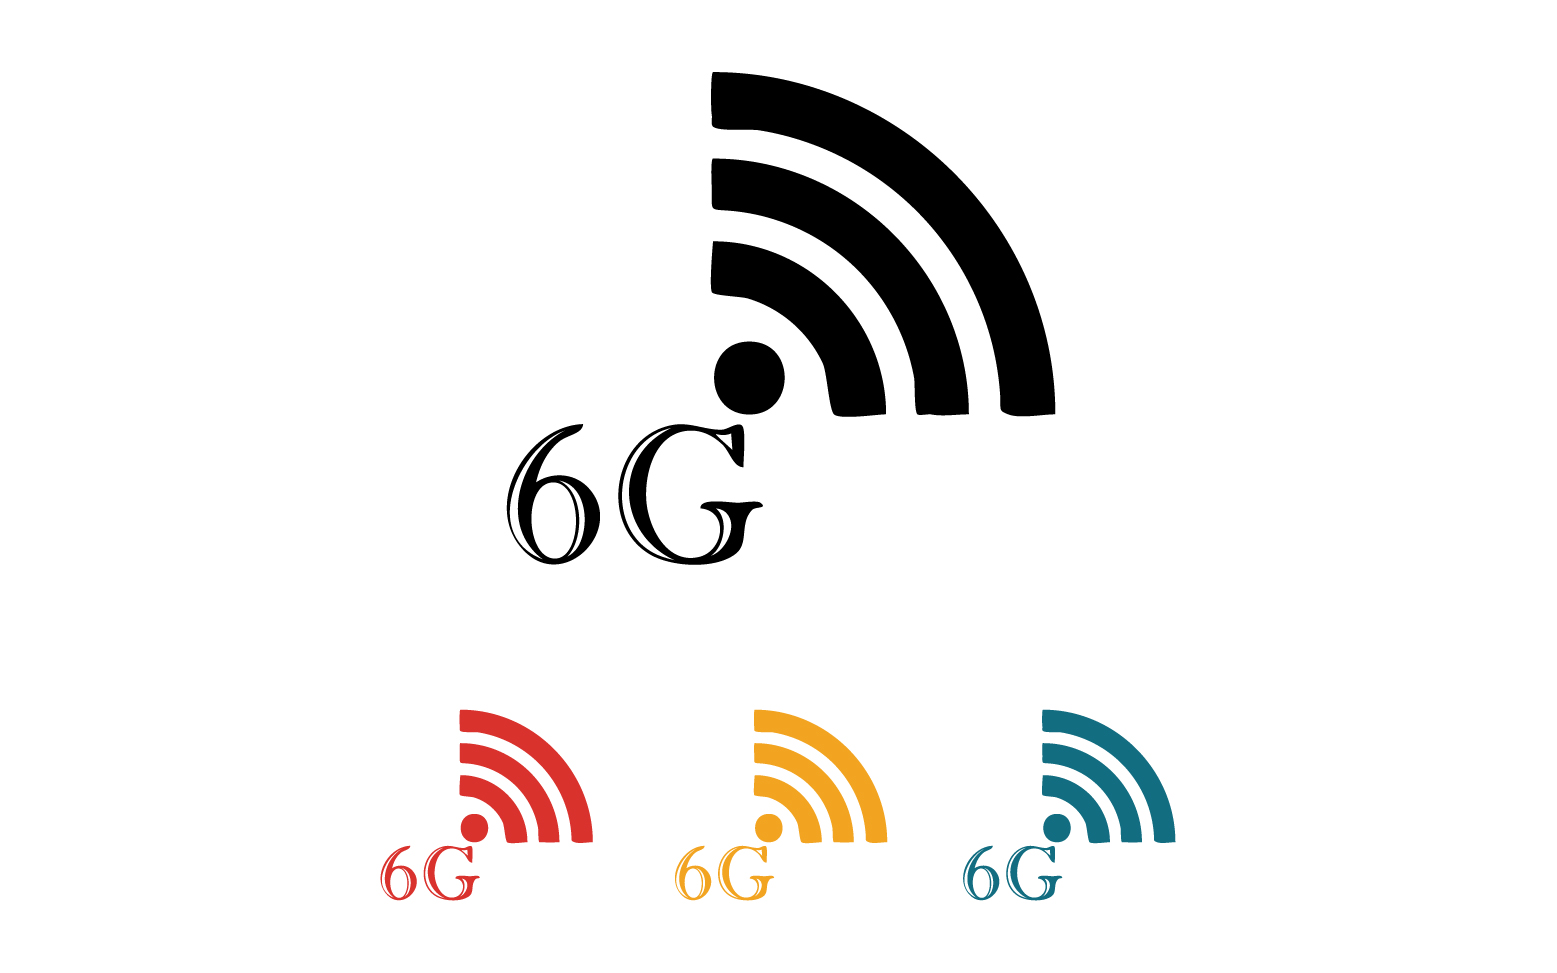 6G signal network tecknology logo vector icon v8